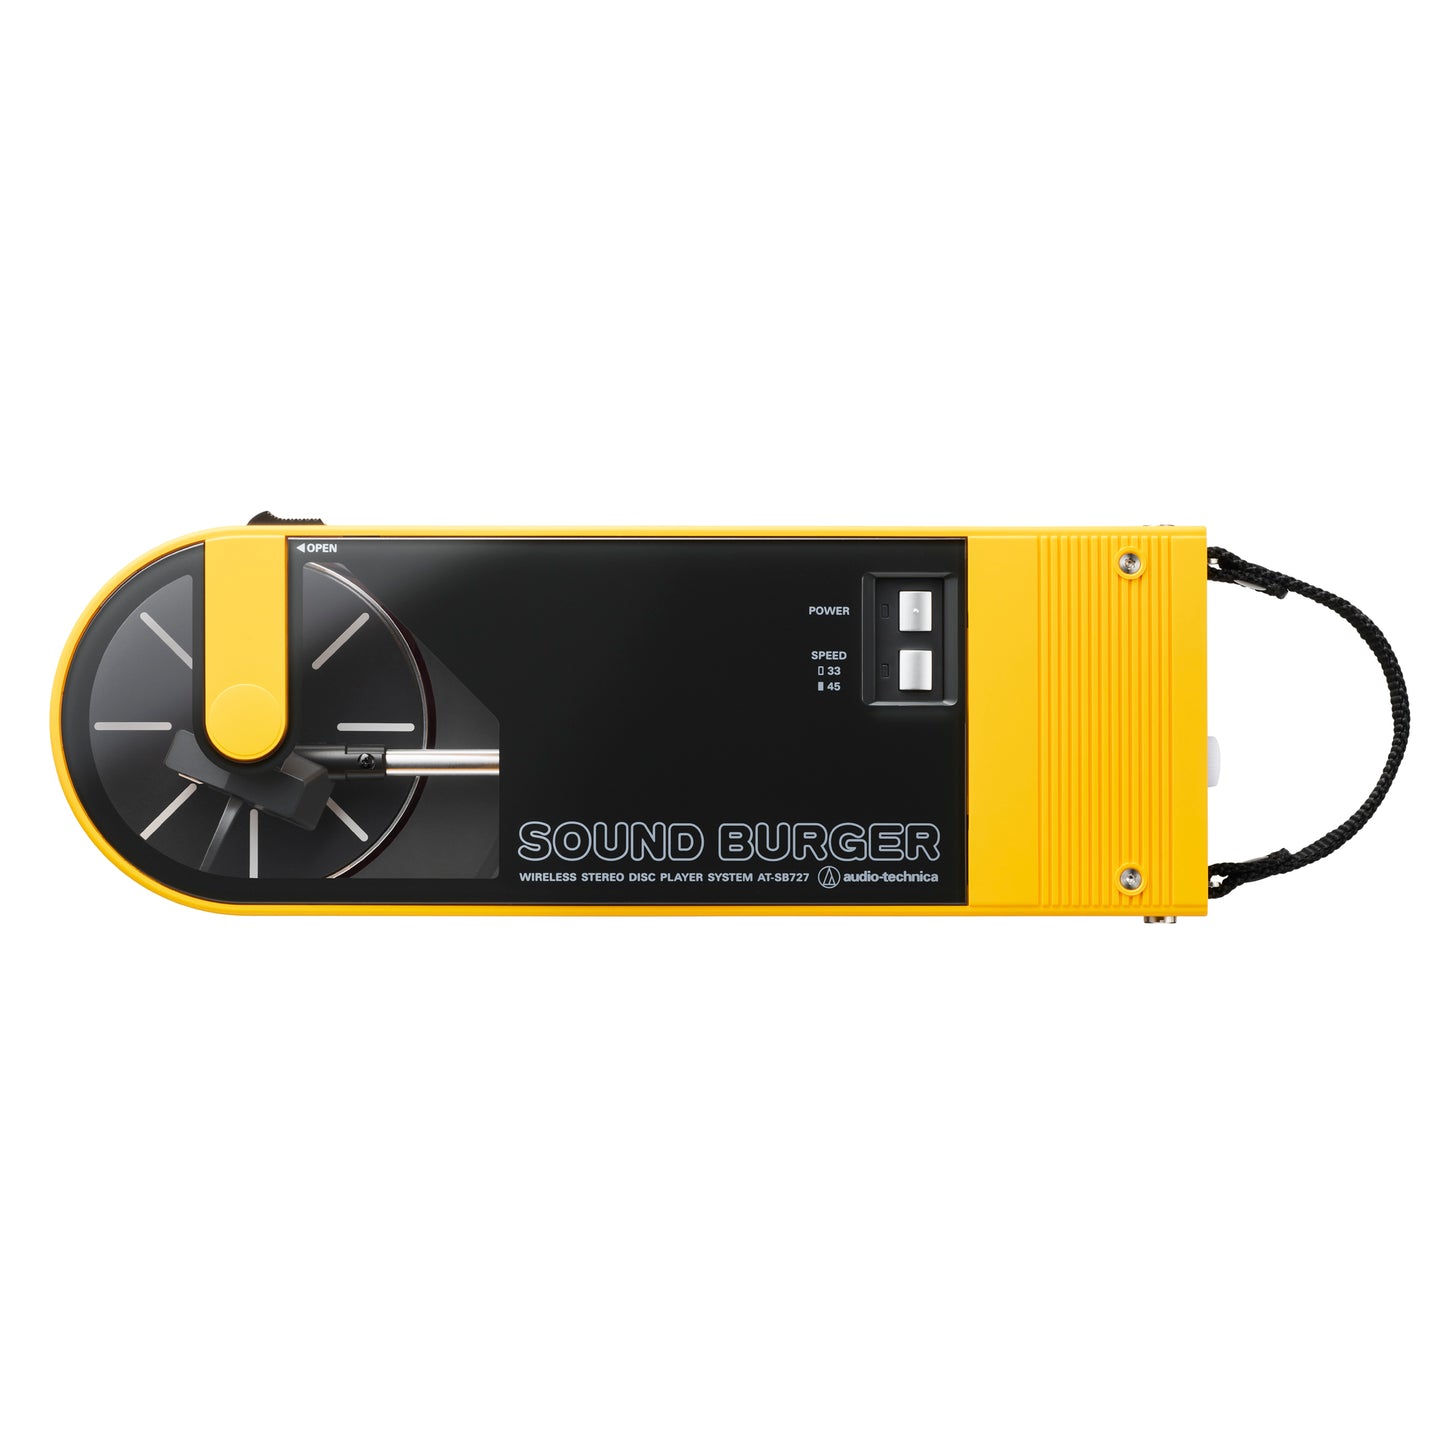 Audio Technica 'Sound Burger' Vinyl Player Portable Turntable - Yellow